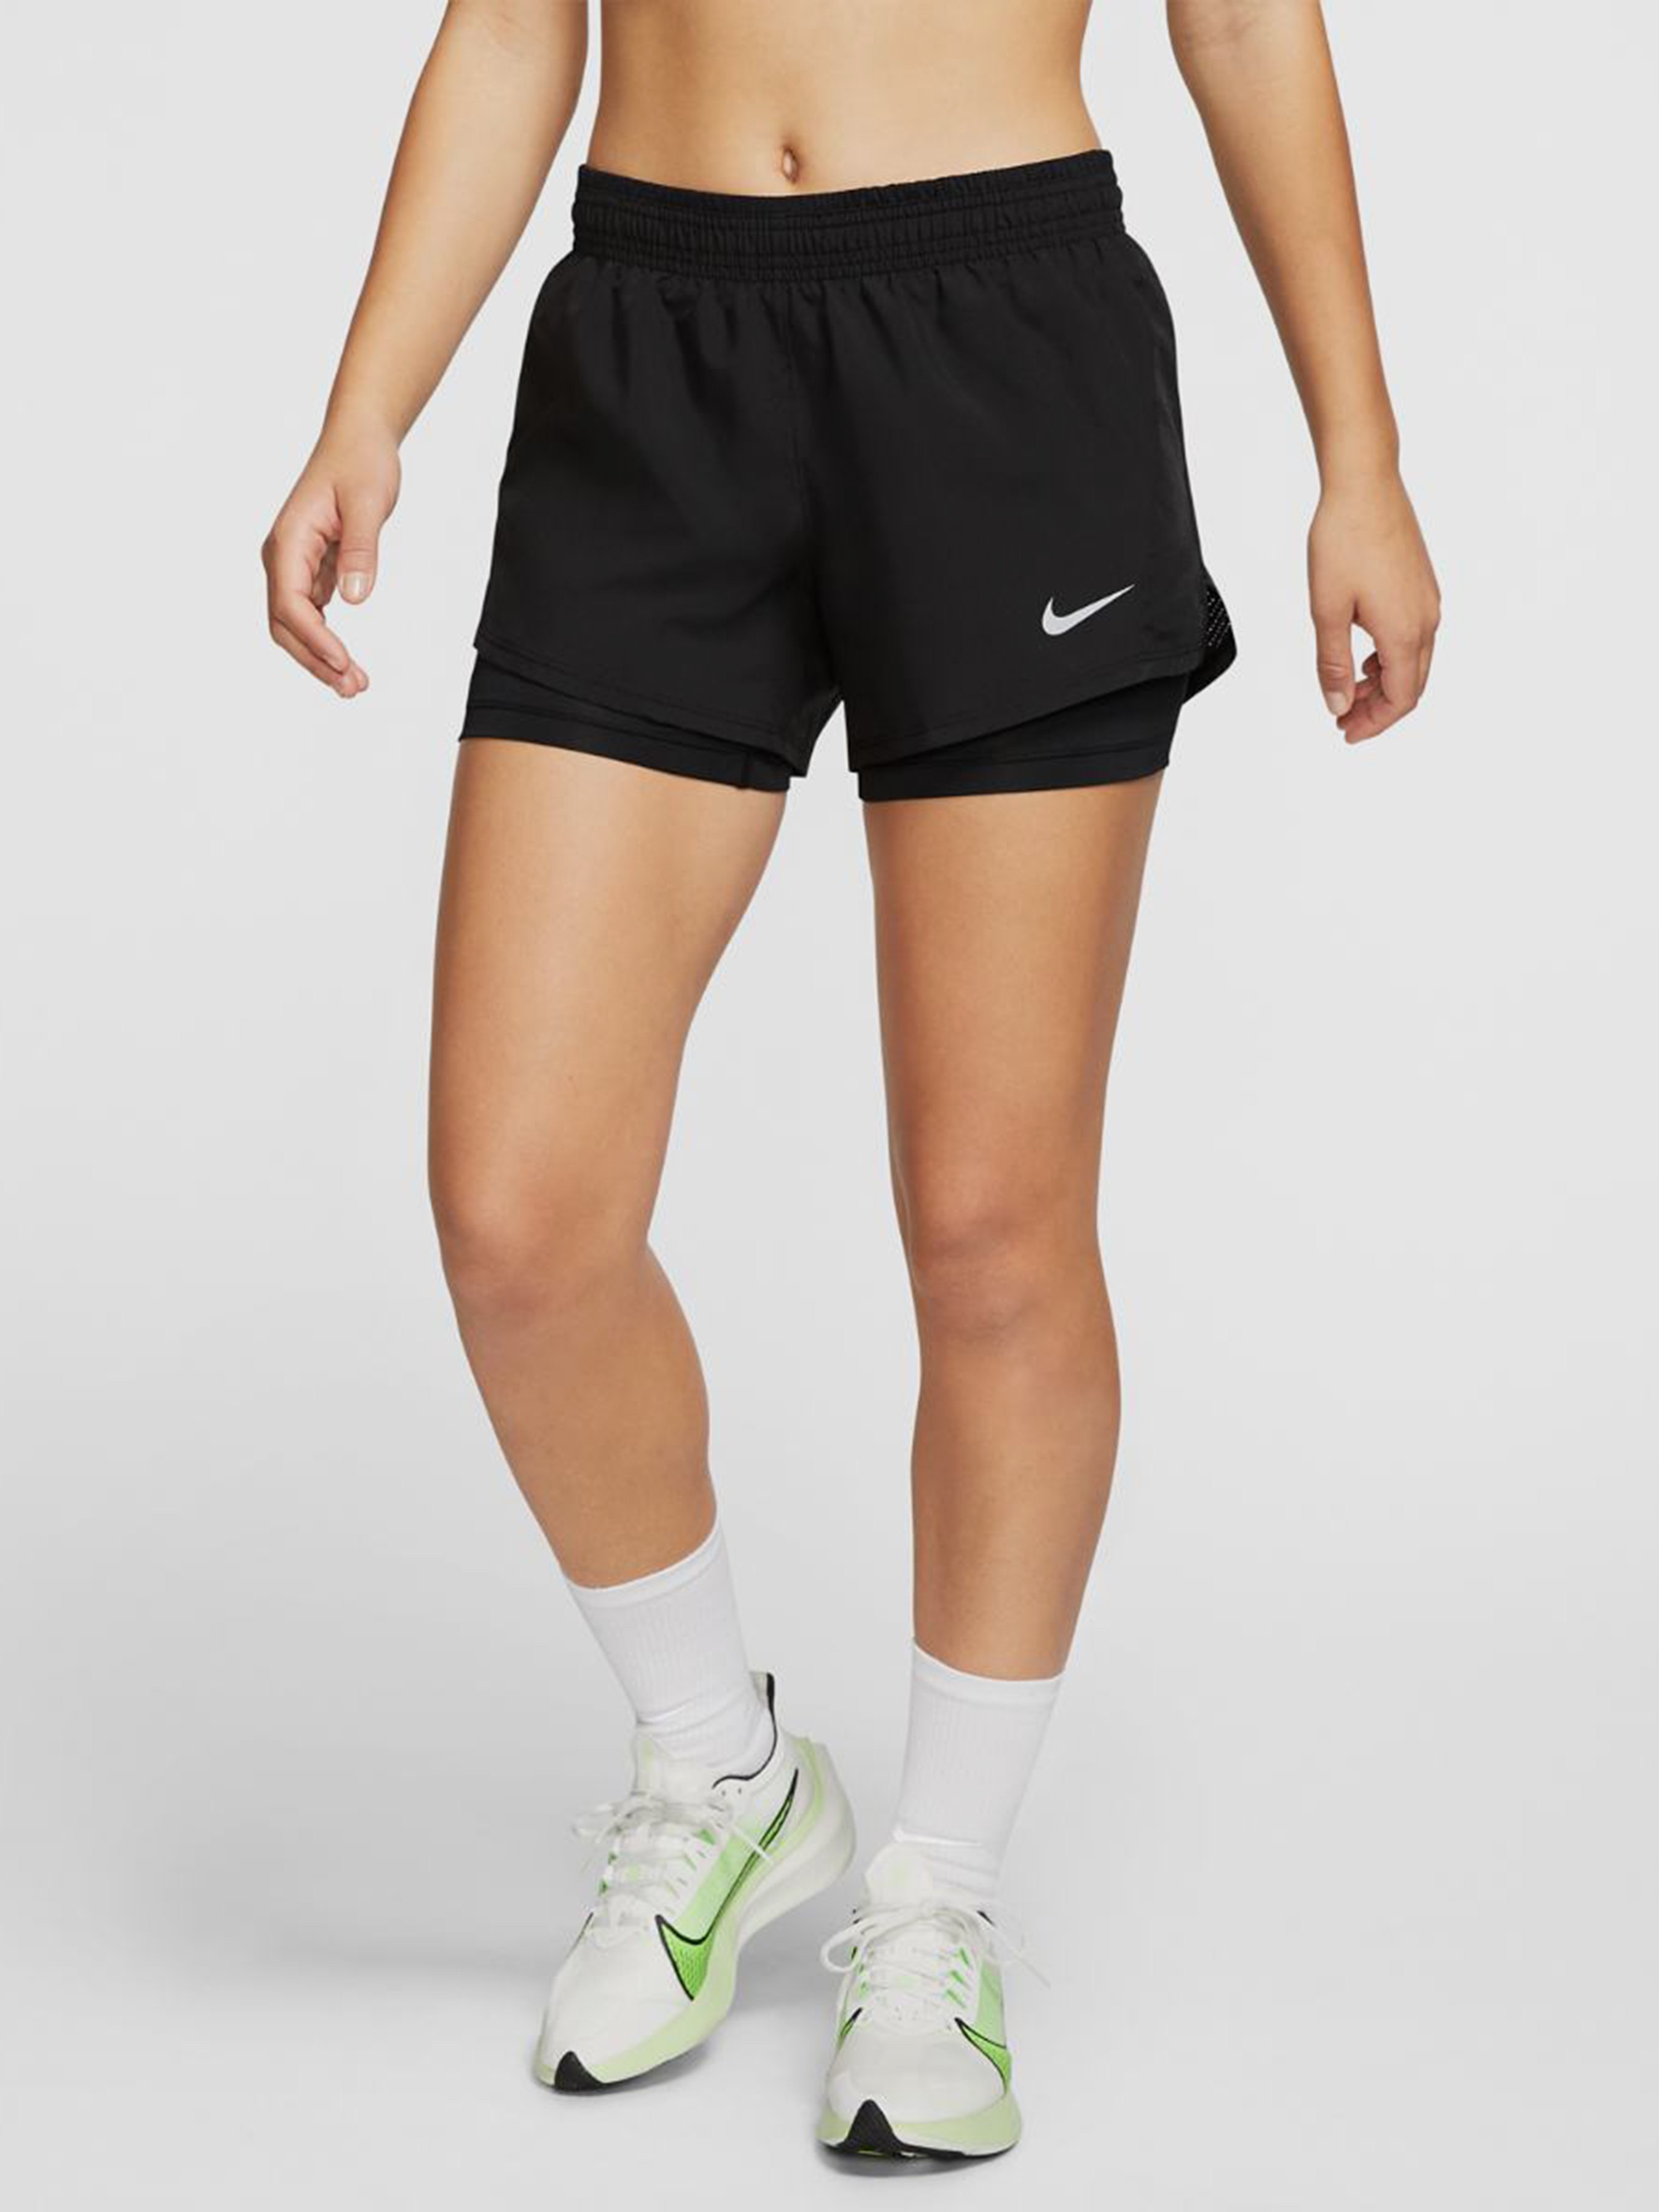 Оригинальные шорты. Шорты найк 10к женские. Шорты найк ck1004-10. Nike tempo Luxe Run Division shorts. Шорты Nike Dri Fit женские.